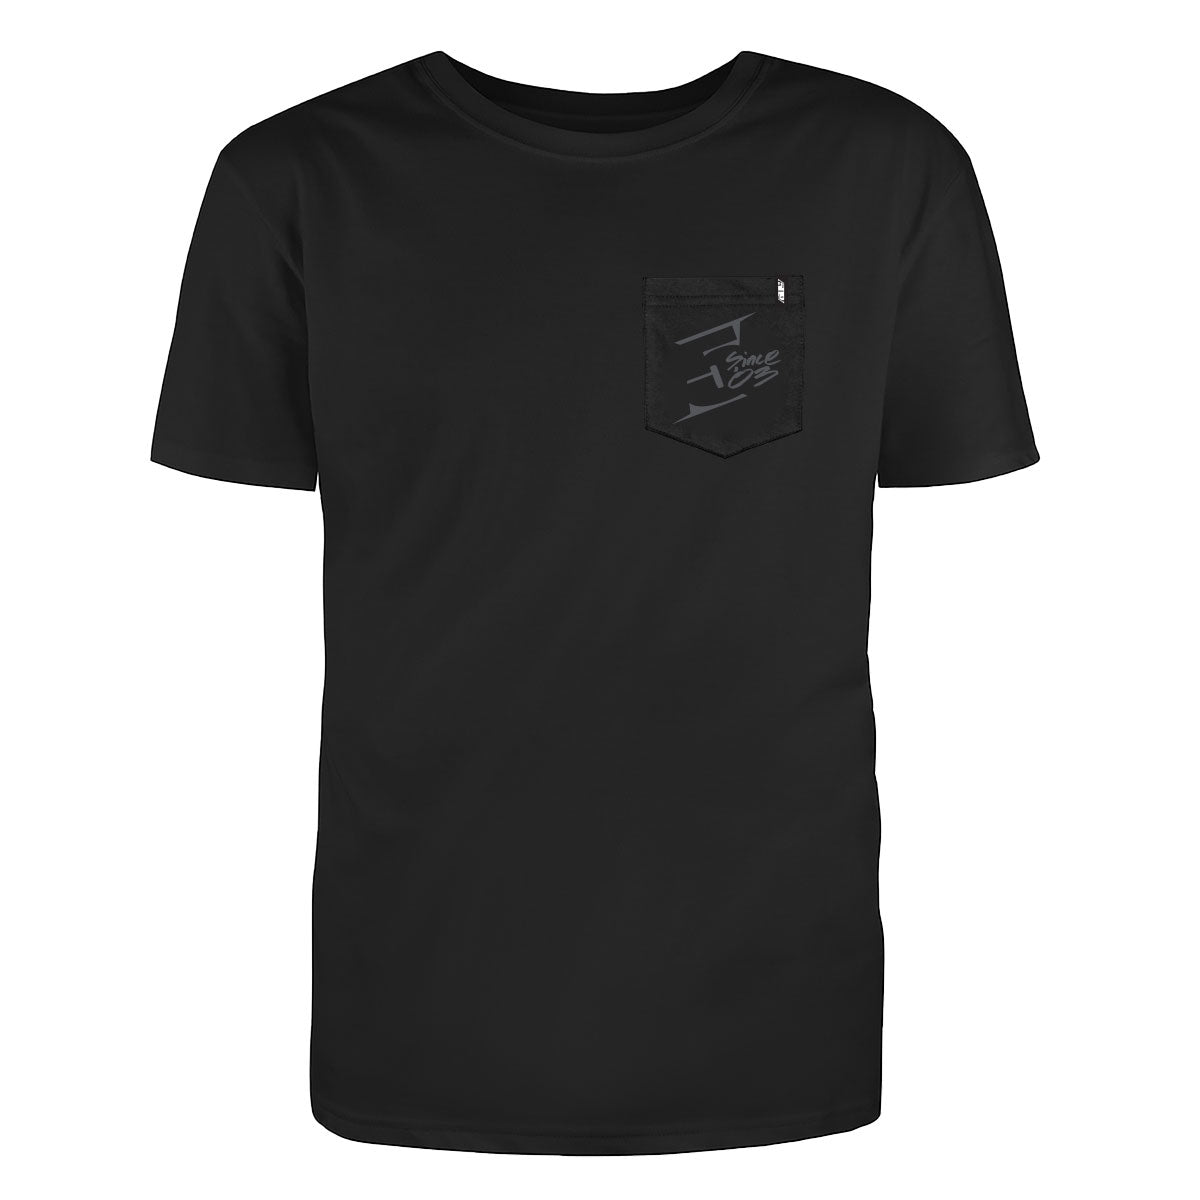 509 Arsenal Pocket T-Shirt